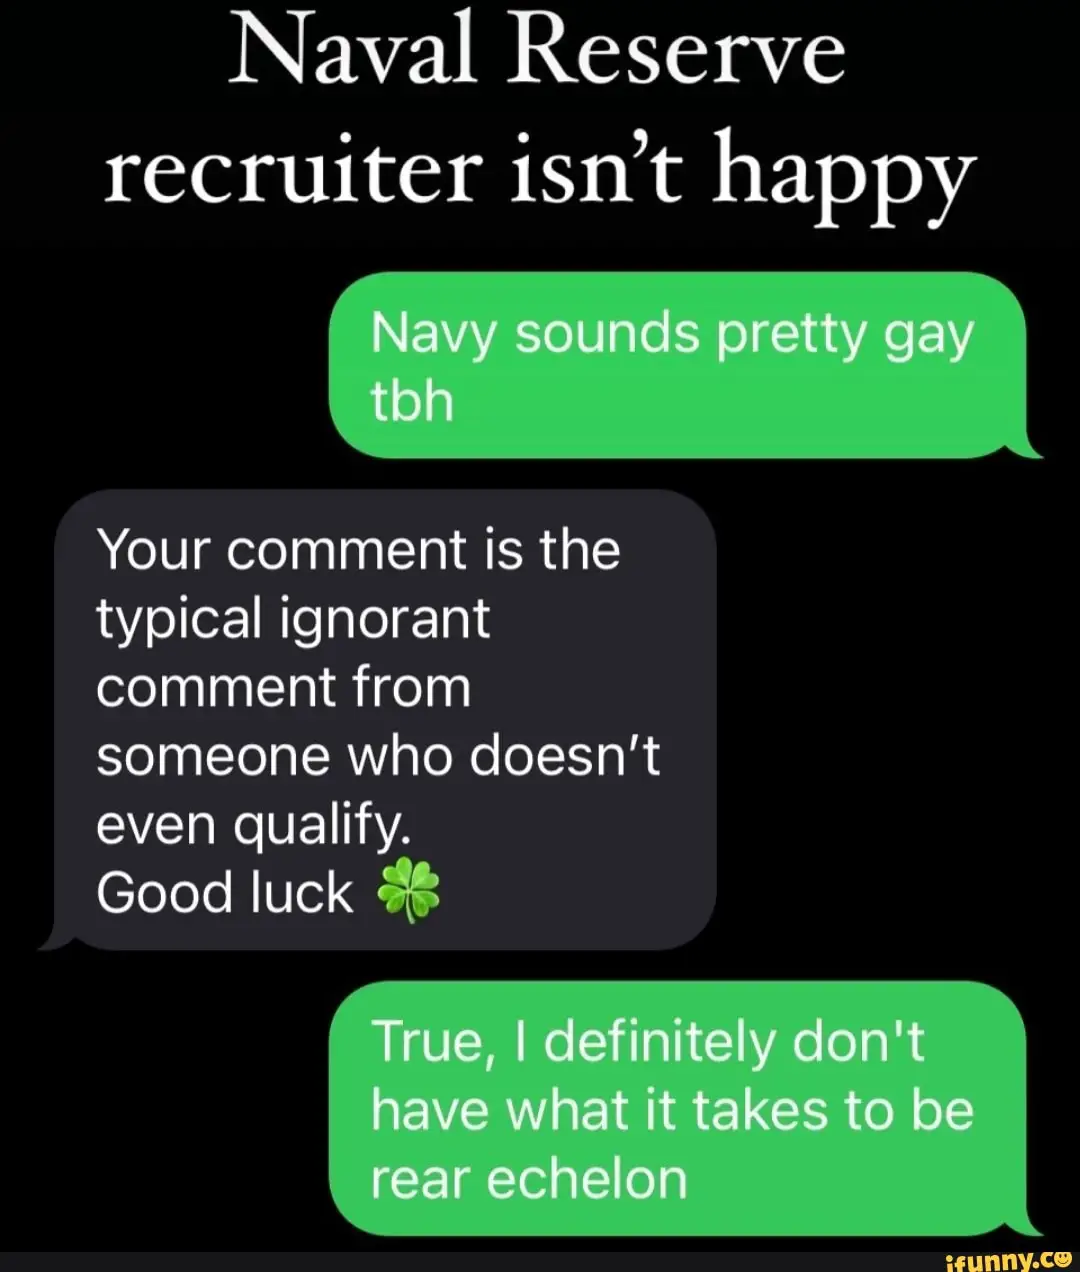 Naval Reserve recruiter isn